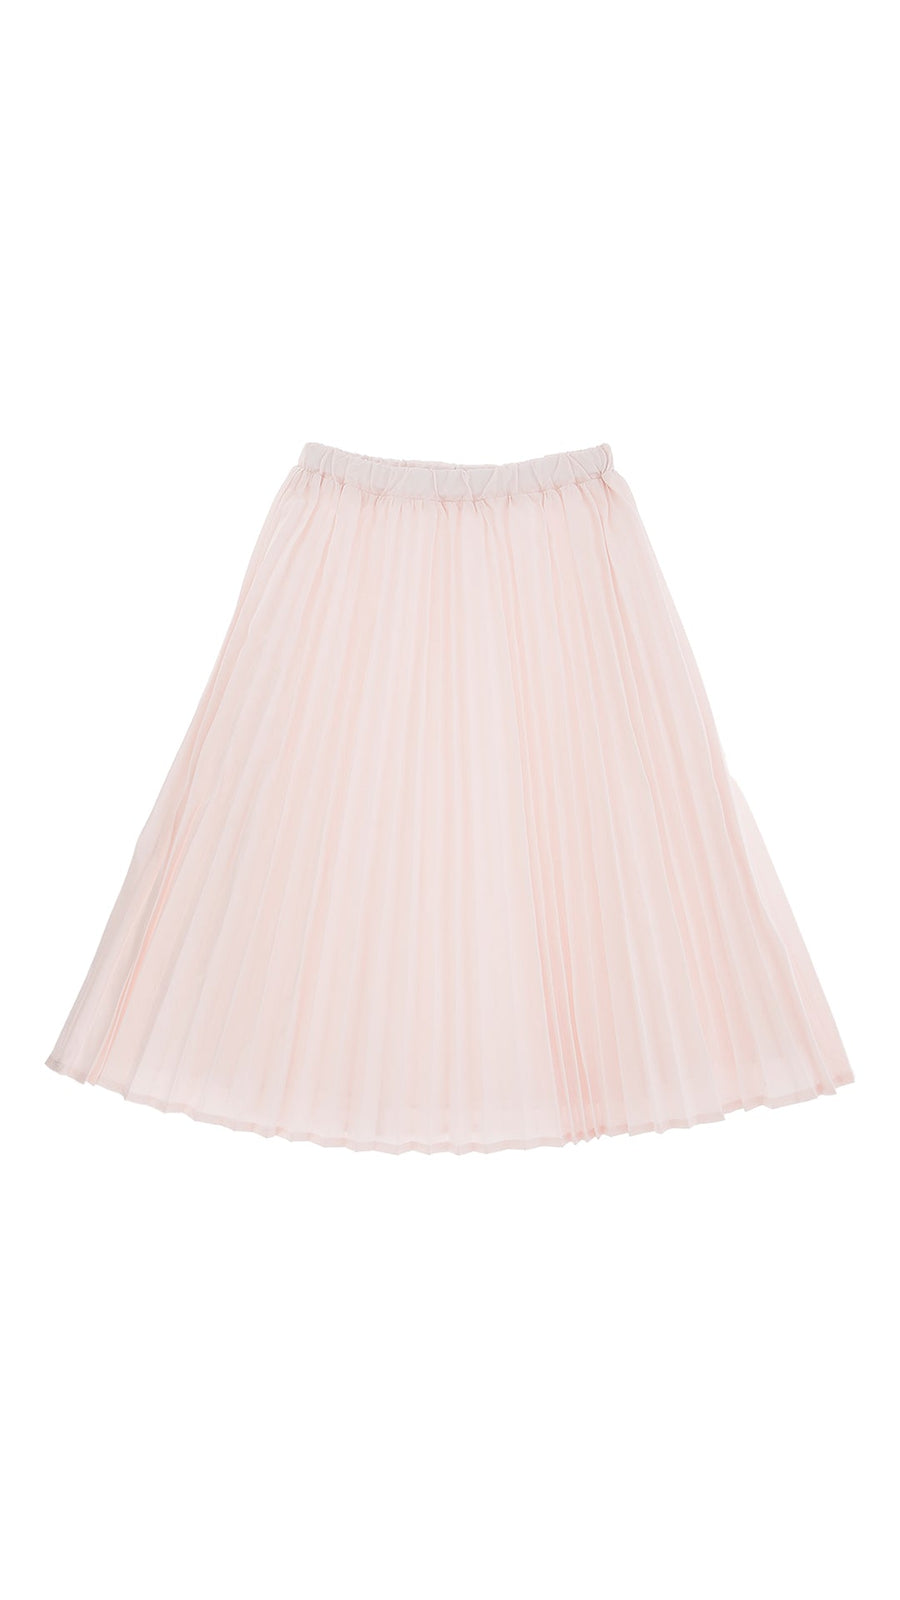 Pleated Taffeta Skirt - C005 Pink - Posh New York